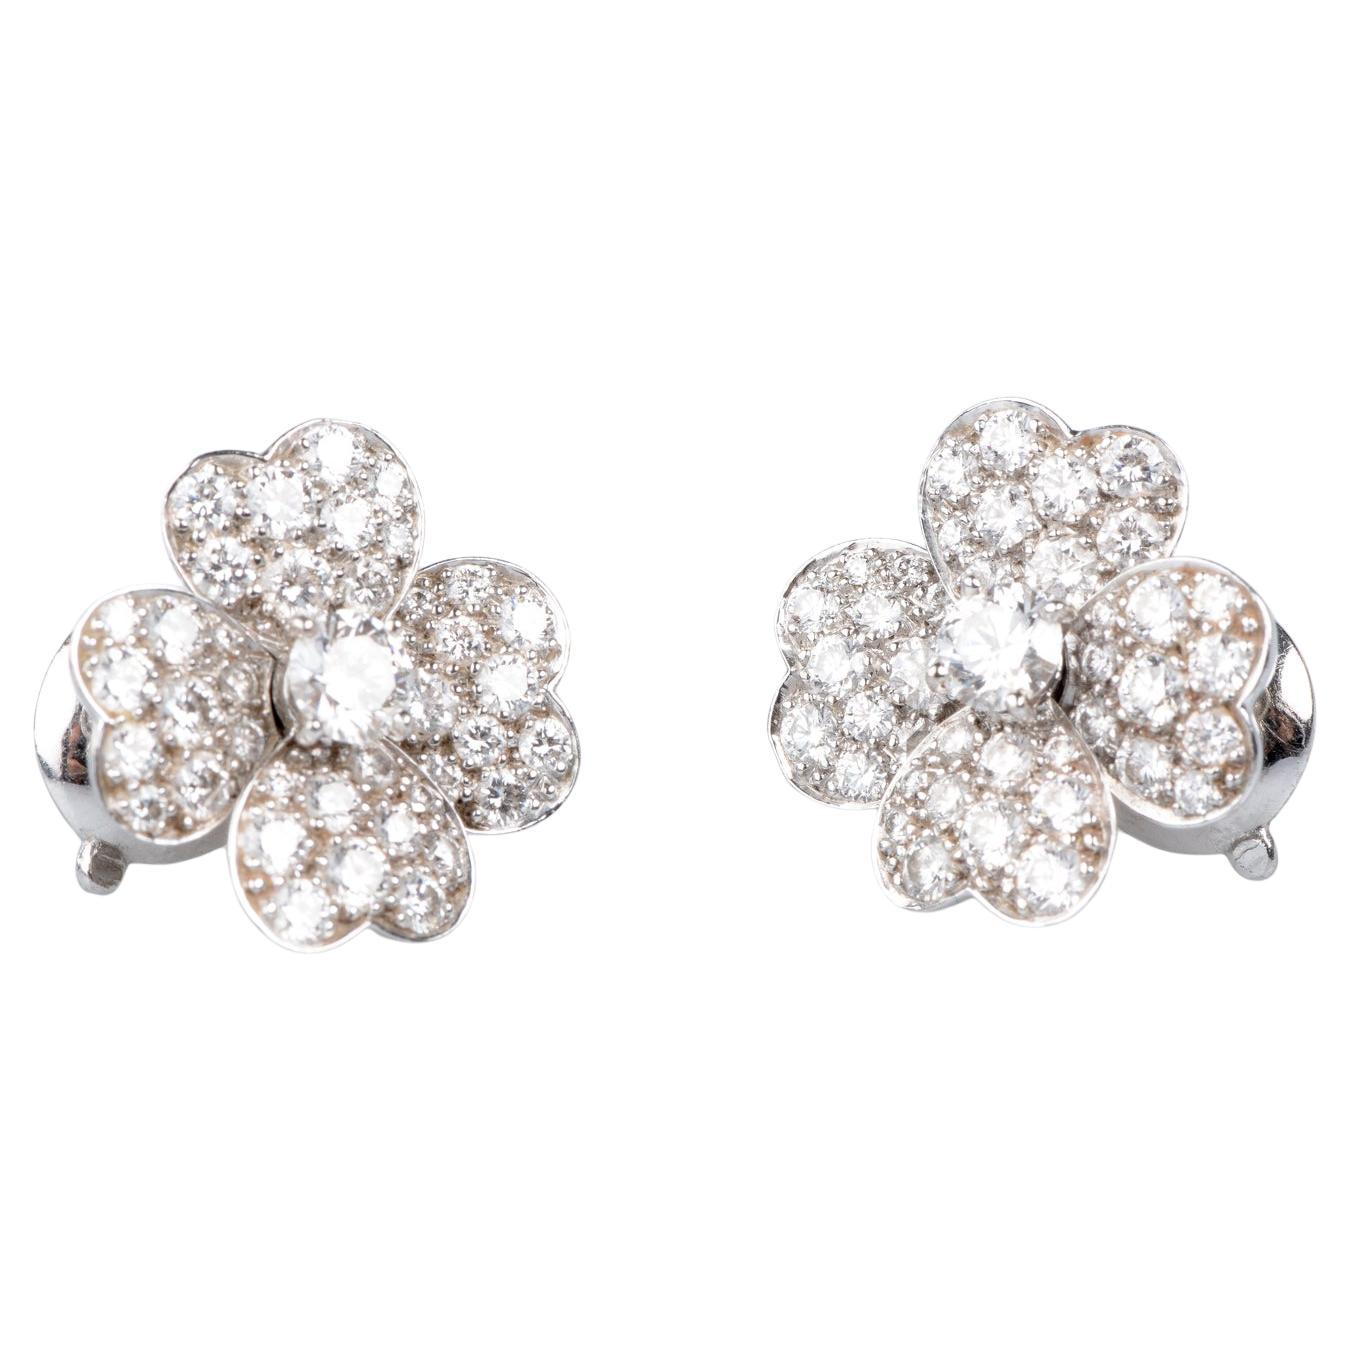 "Cosmos" earrings by Van Cleef & Arpels in gold and diamonds